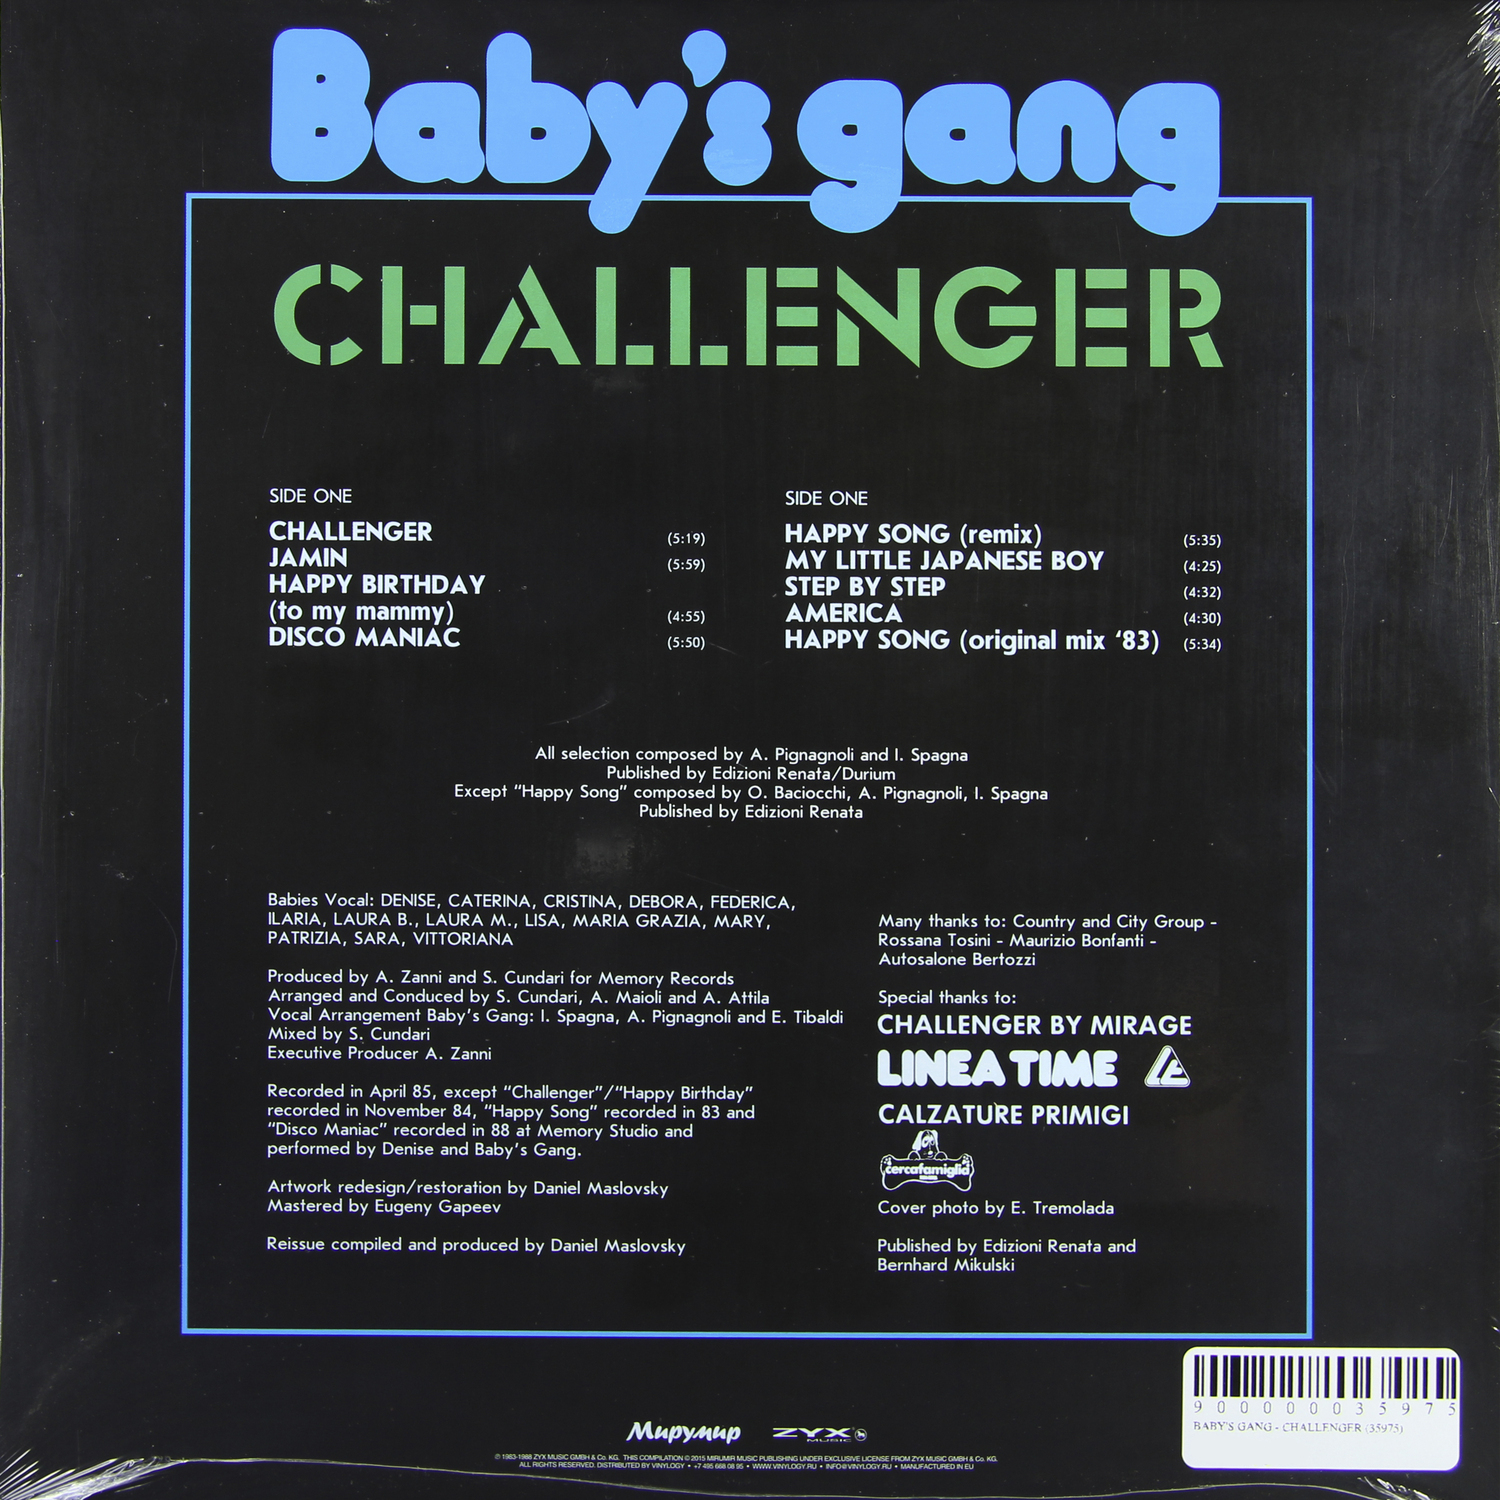 Mentalitè baby gang. Baby s gang пластинка. Baby's gang Challenger фотоальбом. Группа Challenger 1985 Baby gang. Babys gang Challenger винил.